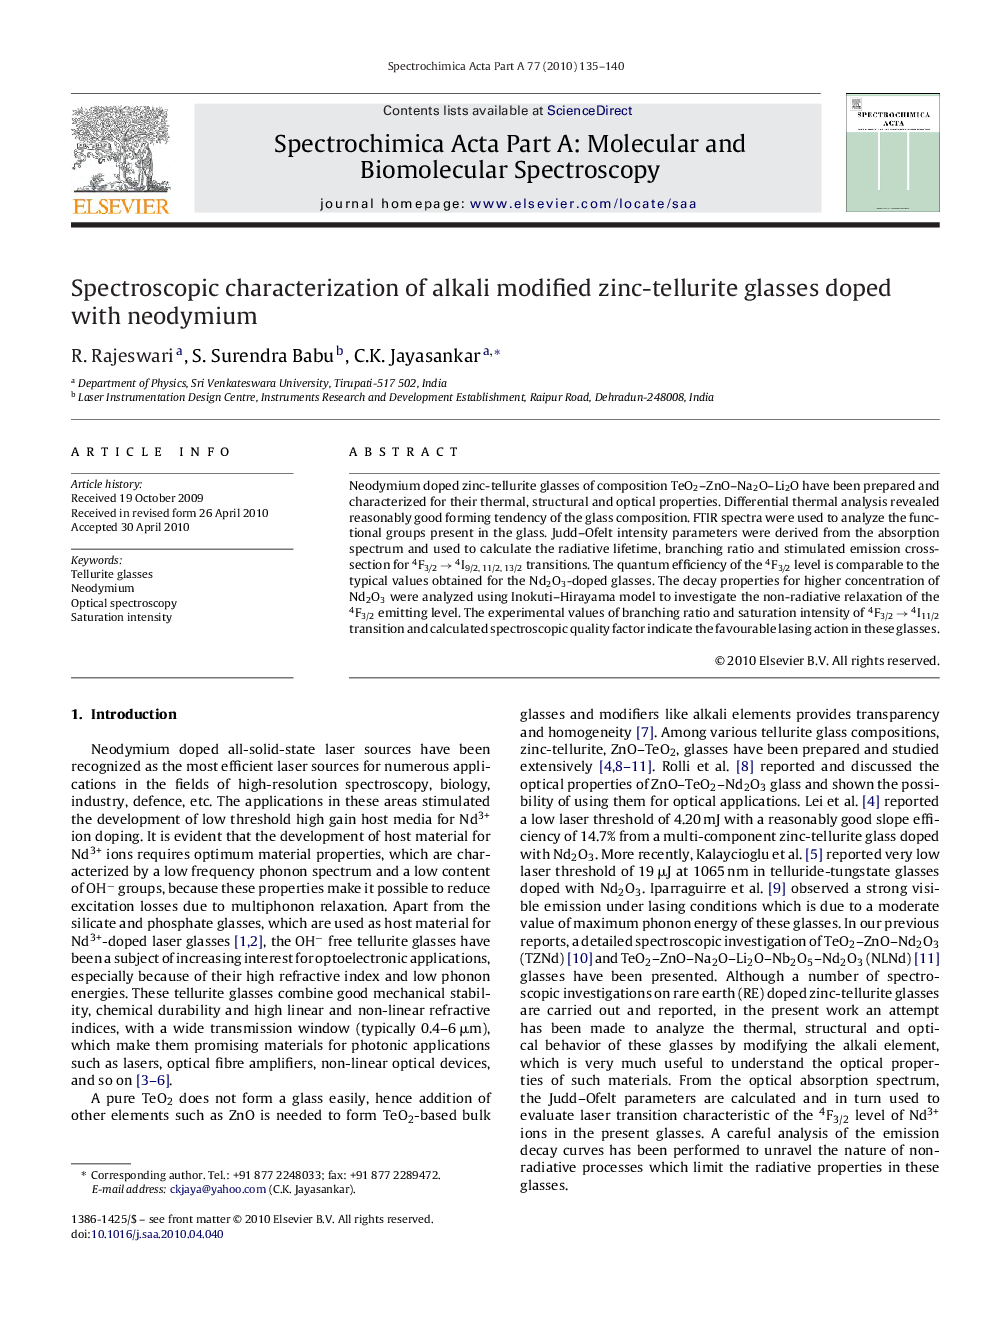 Spectroscopic characterization of alkali modified zinc-tellurite glasses doped with neodymium